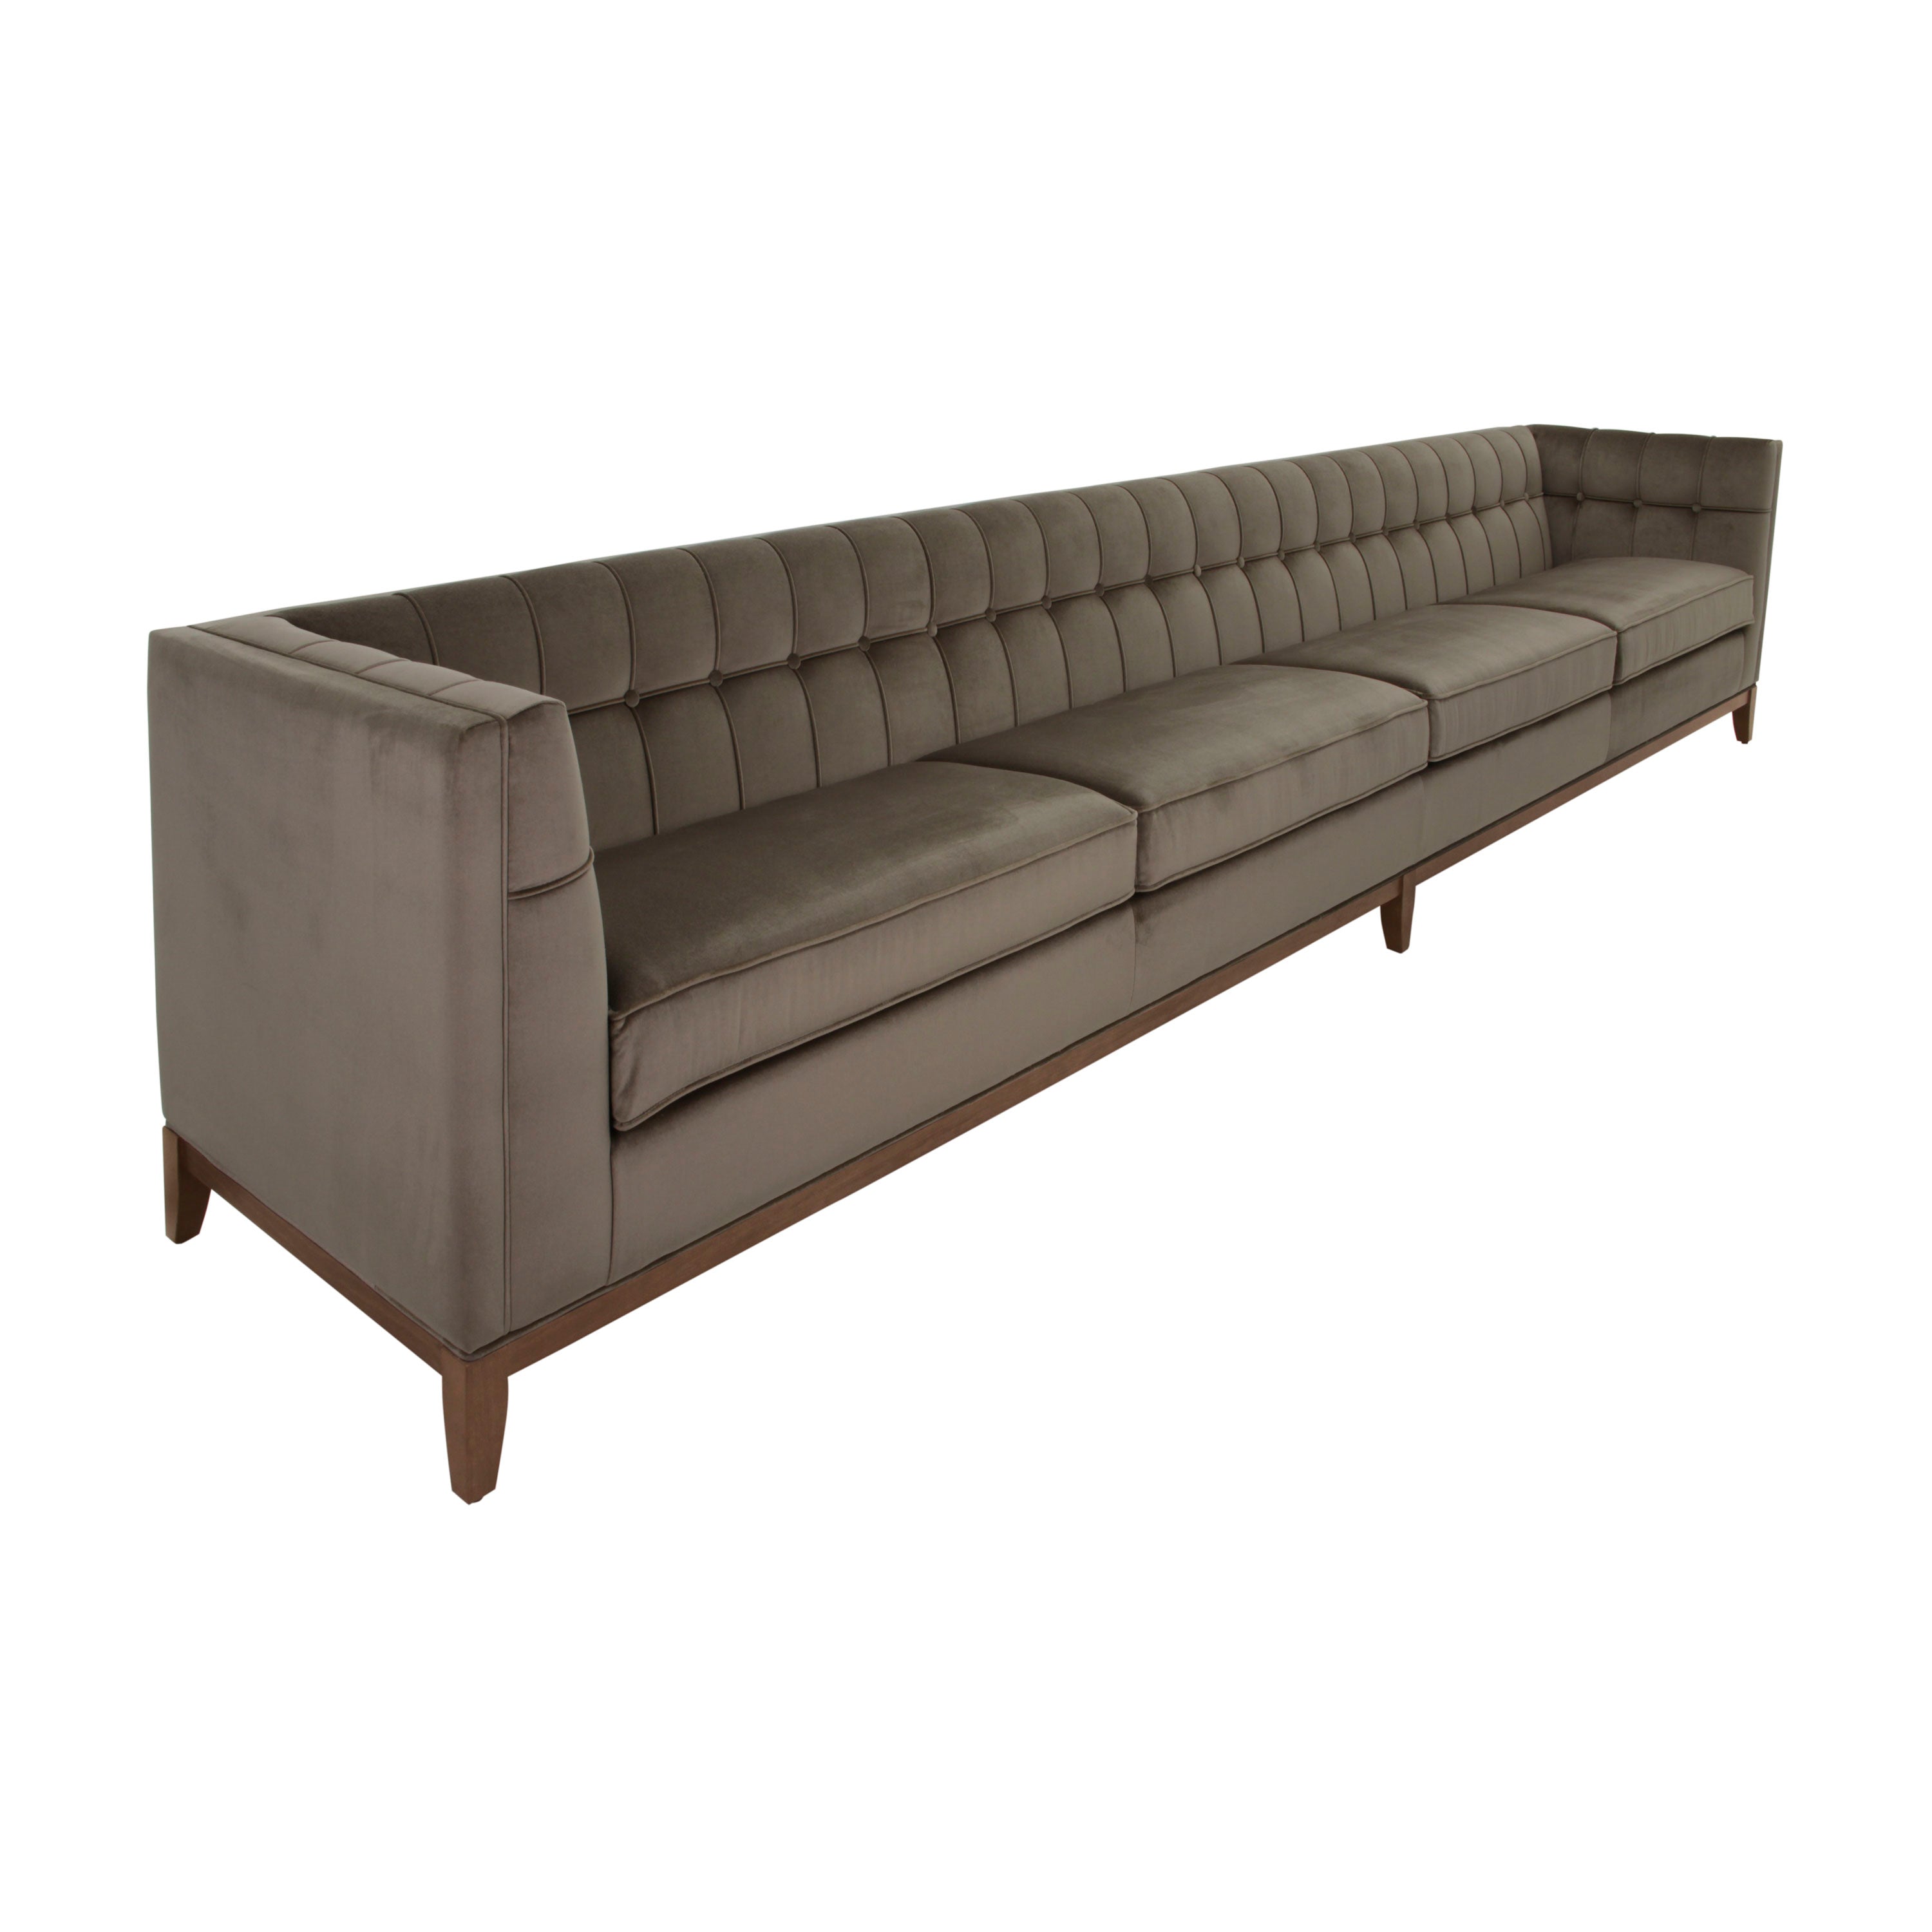 Custom Bespoke Upholstered Contemporary Modern Tub Style Extra Large Sofa MS043 Custom Made To Order